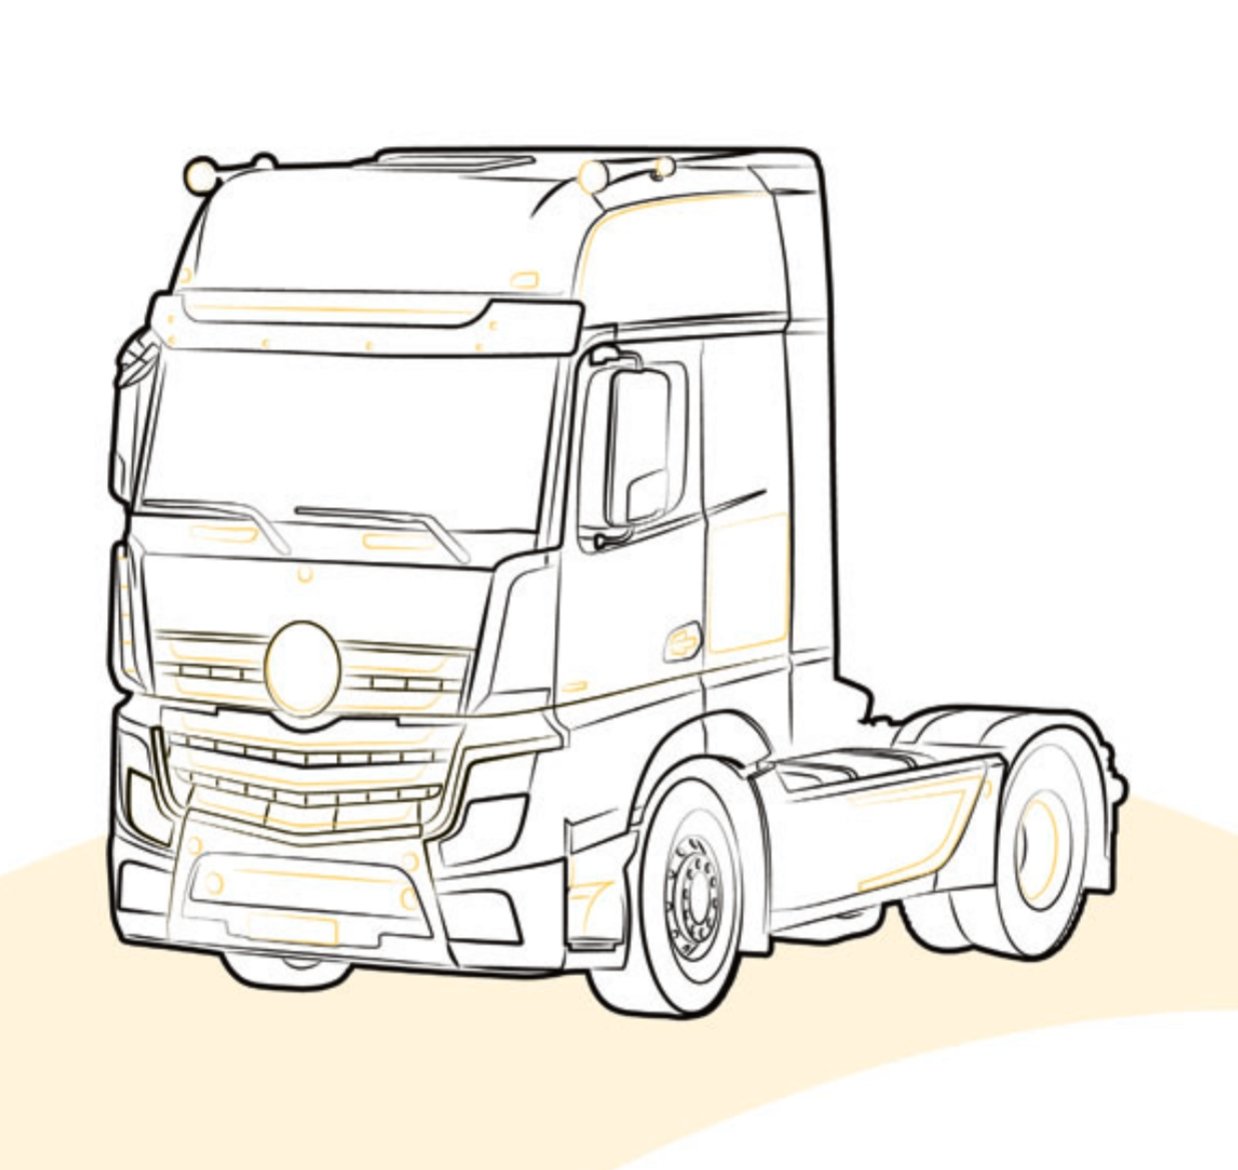 PORTAESTINTORE (6 KG) per MERCEDES ACTROS | MP4 lato 7422590688 - Carrozzeria Truck